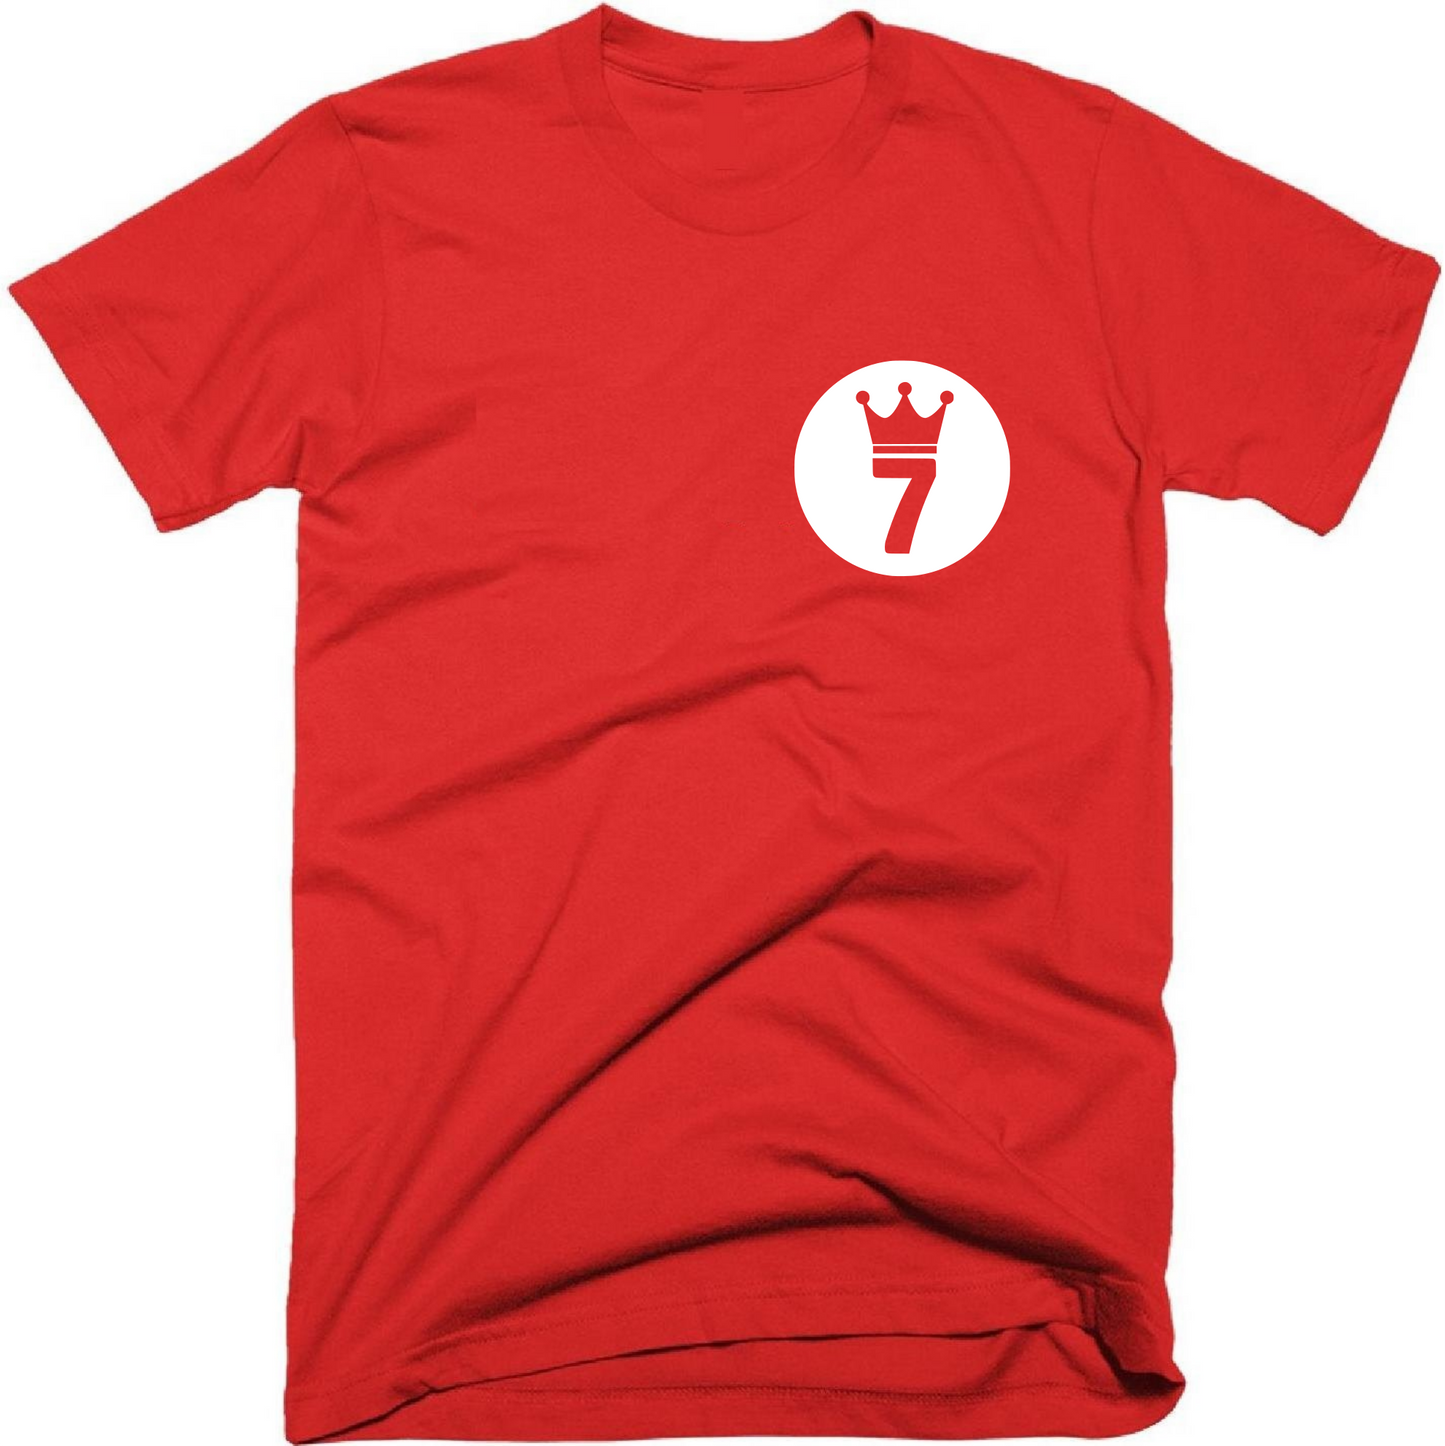 Eric Cantona - King 7 - Circle design - Mens T- Shirt